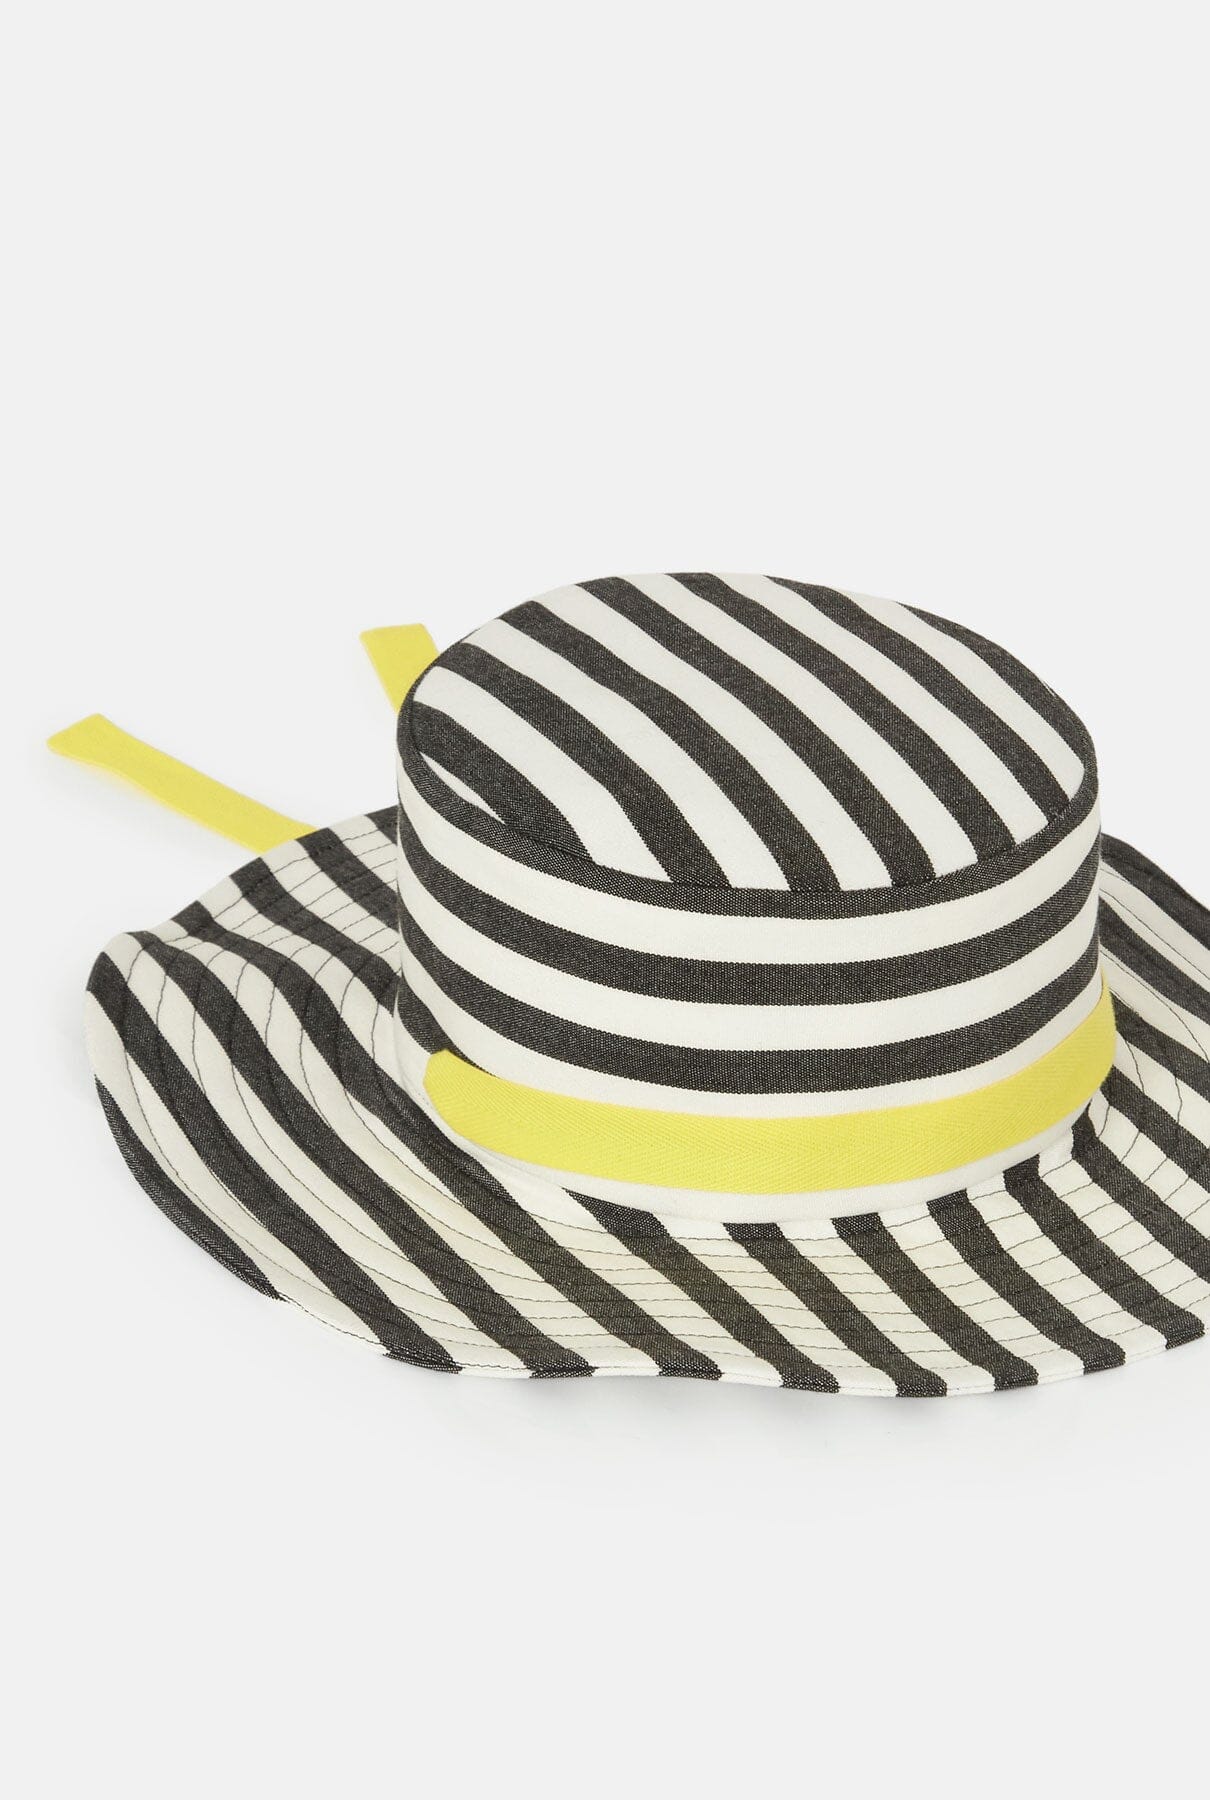 Navia Stripes Hats Nana Golmar 